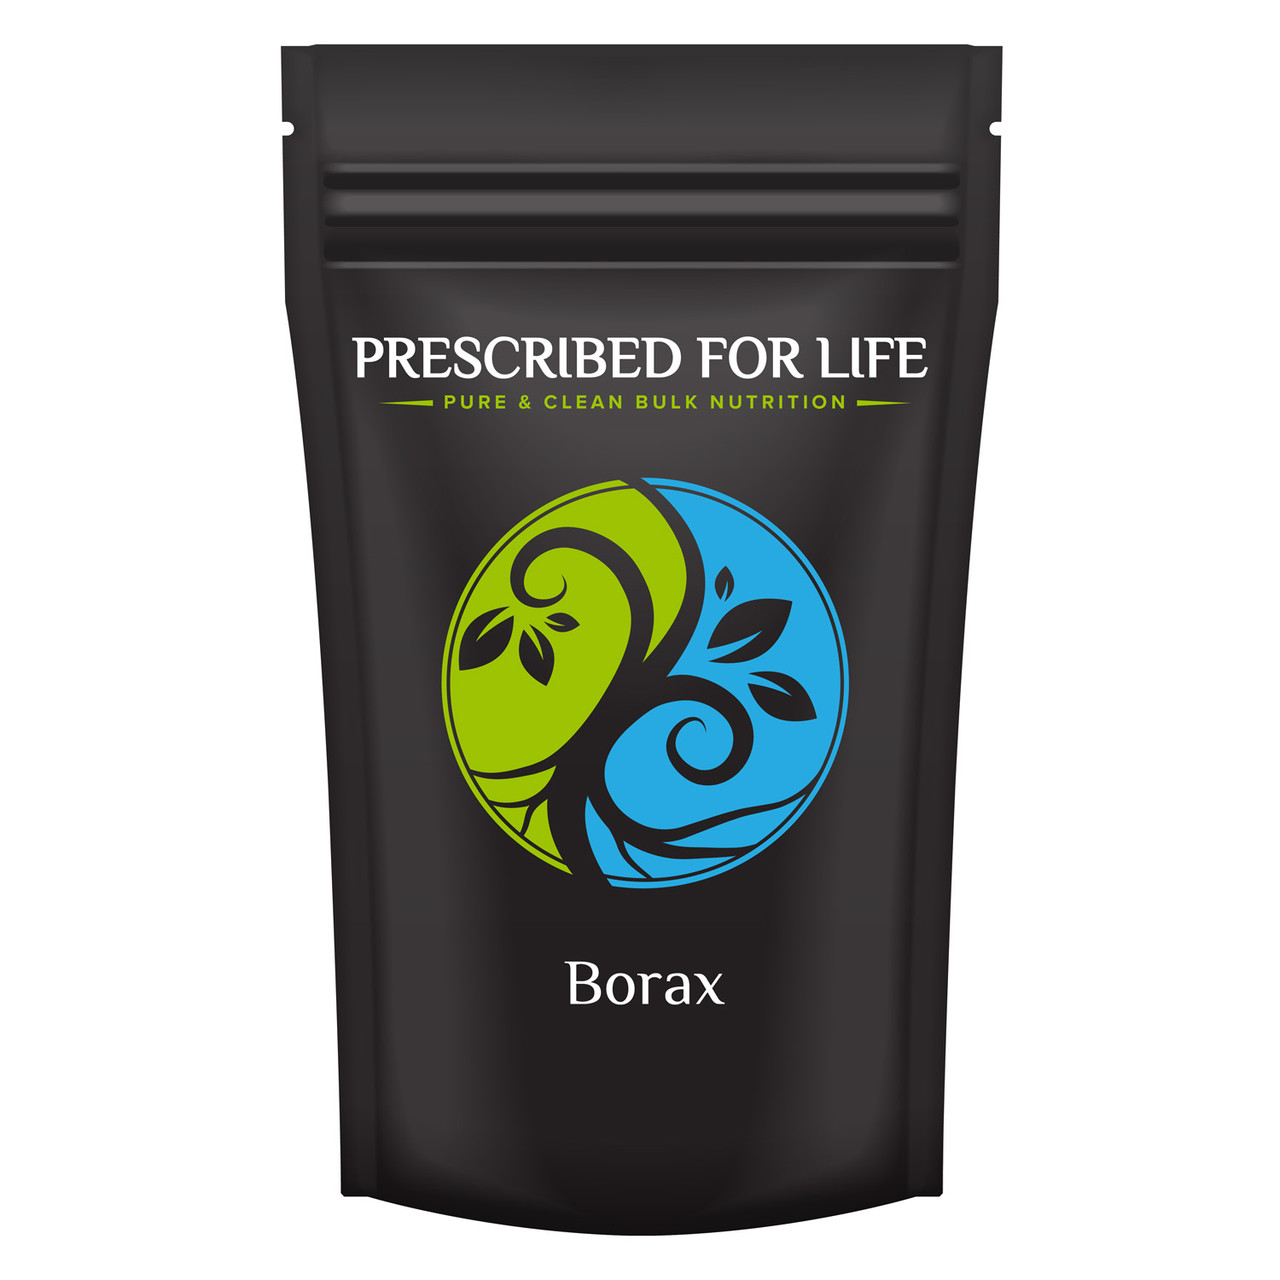 How Borax Can Help Alleviate Arthritis Symptoms Naturally